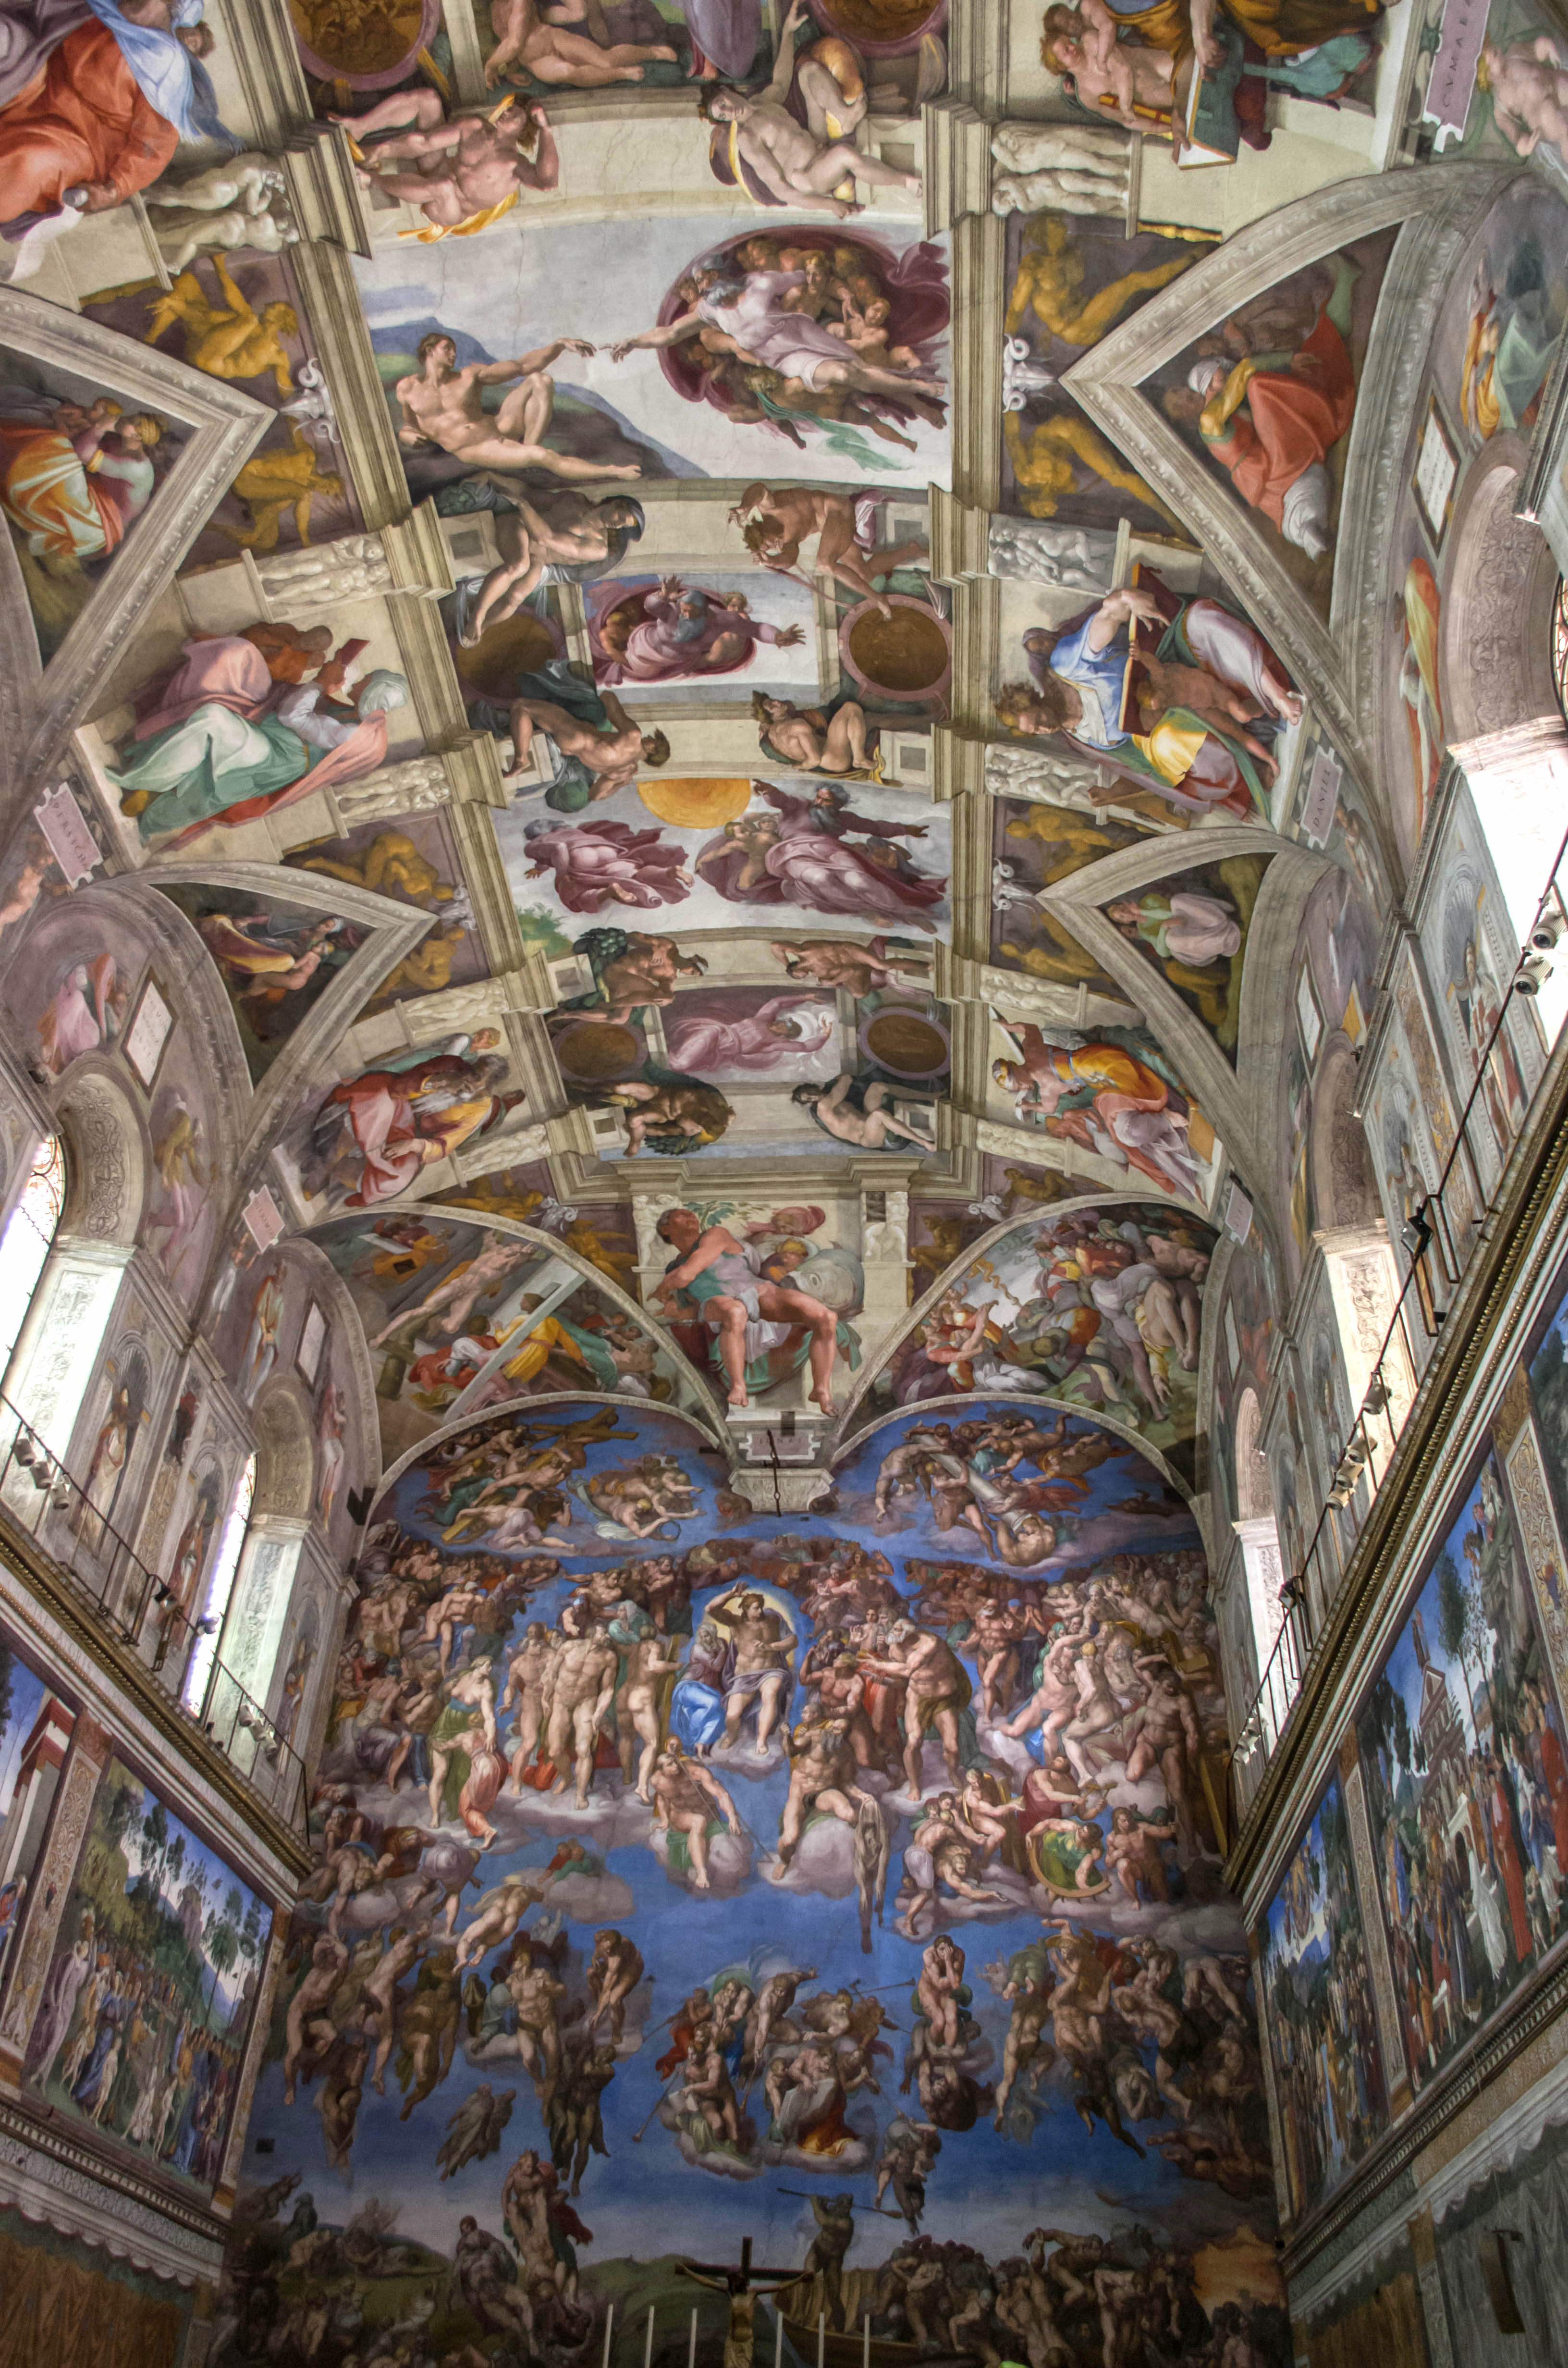 <p></p><p><strong><em>Michelangelo______________, 1508-1512, fresco, Sistine Chapel, the Vatican, Rome Italy</em></strong></p>